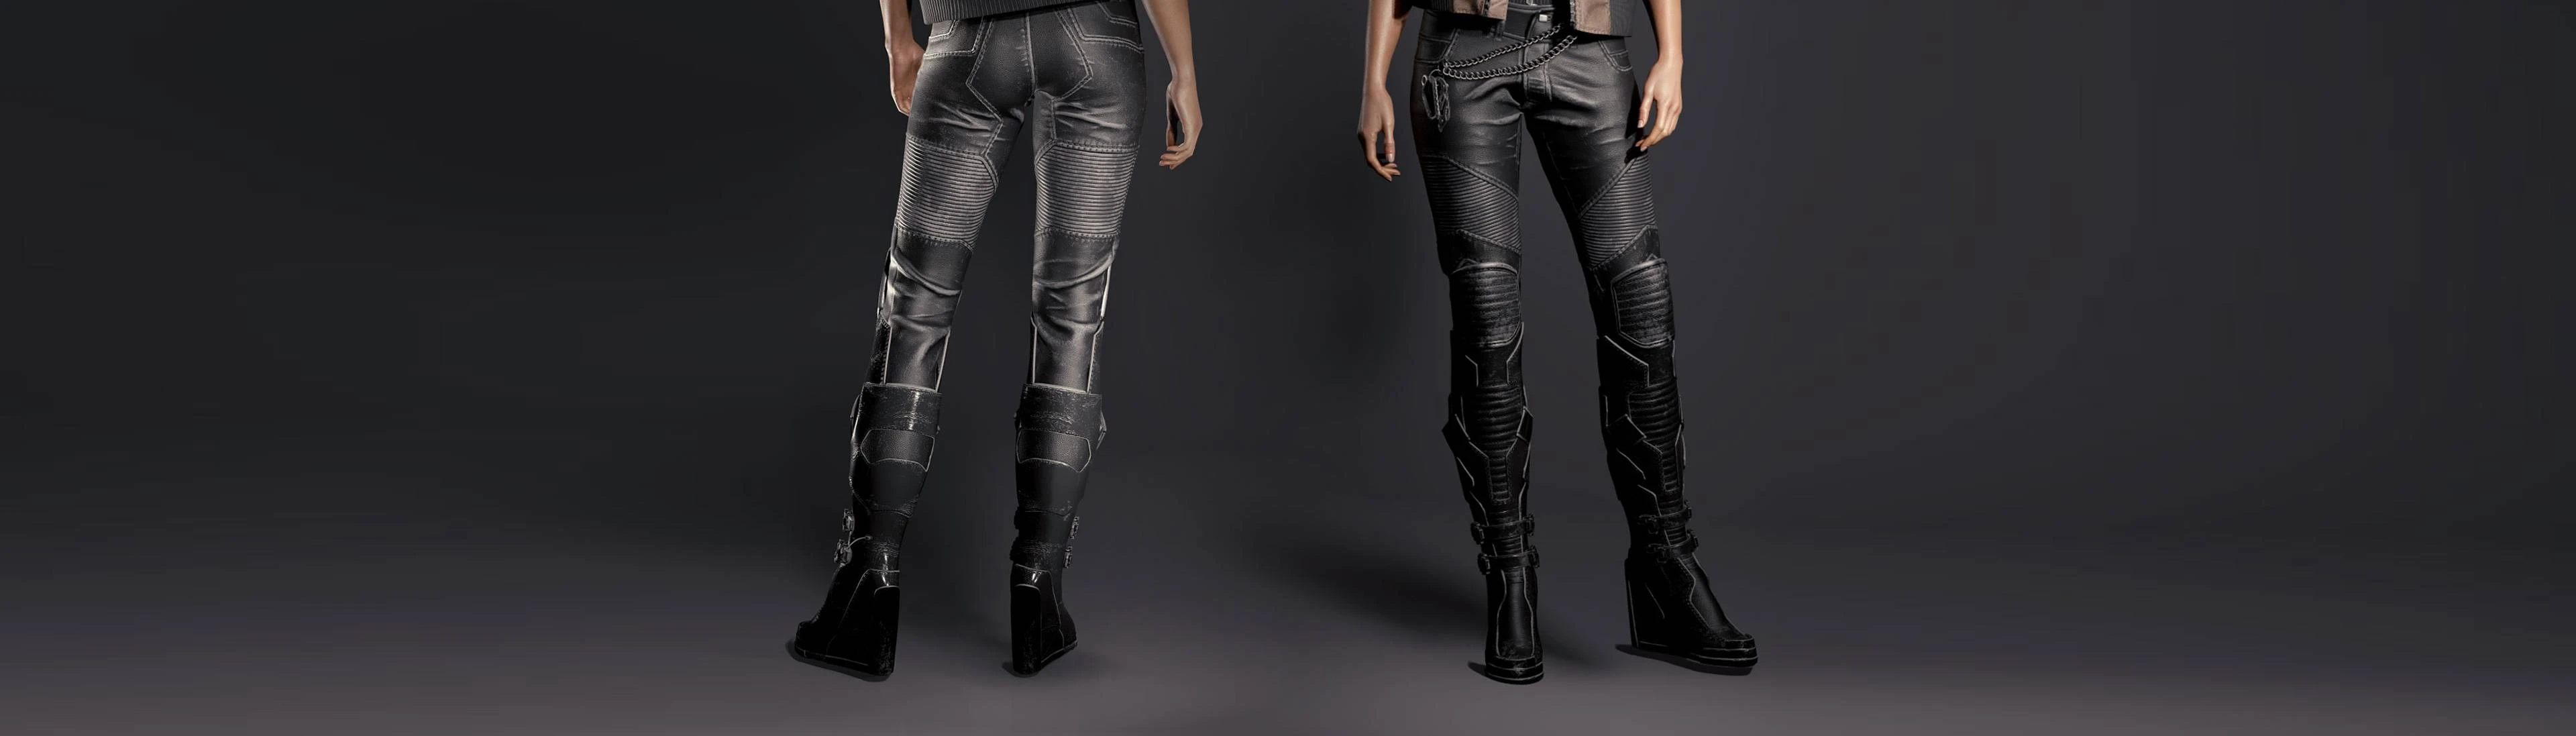 Original E3 and Concept Art Pants (ArchiveXL) at Cyberpunk 2077